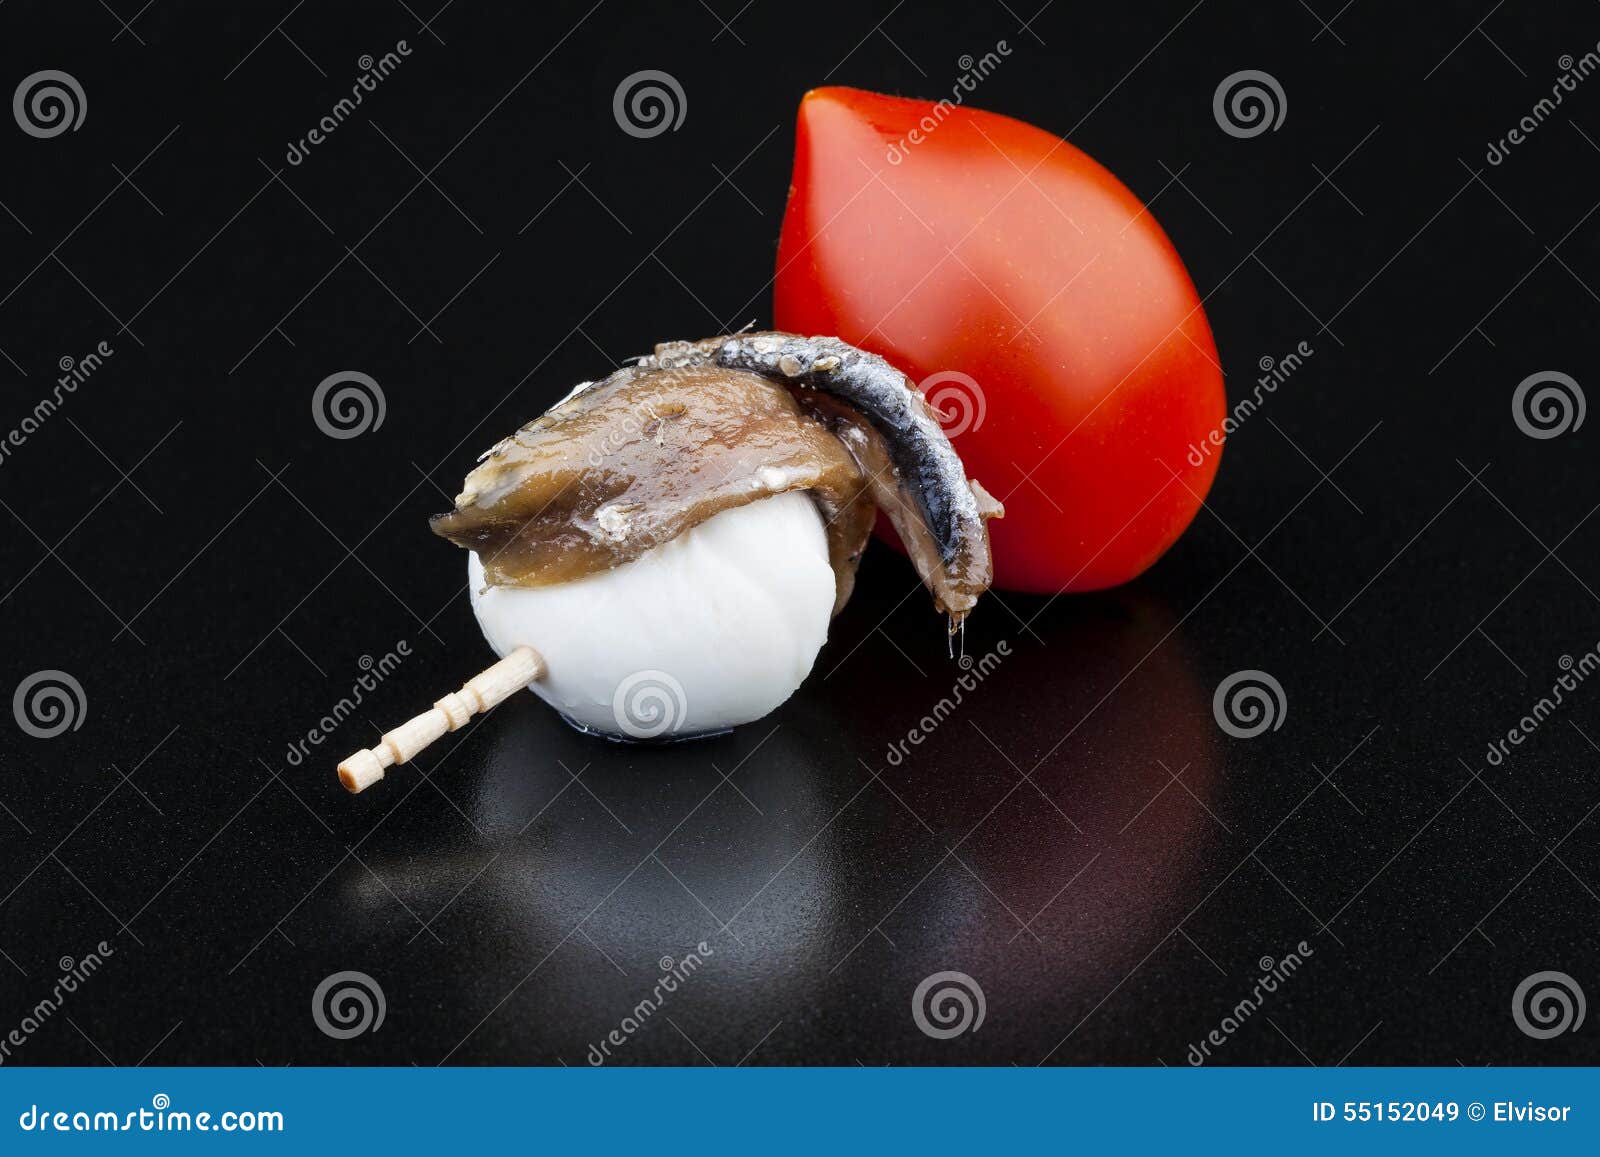 anchovy pincho with tomato and mozzarella